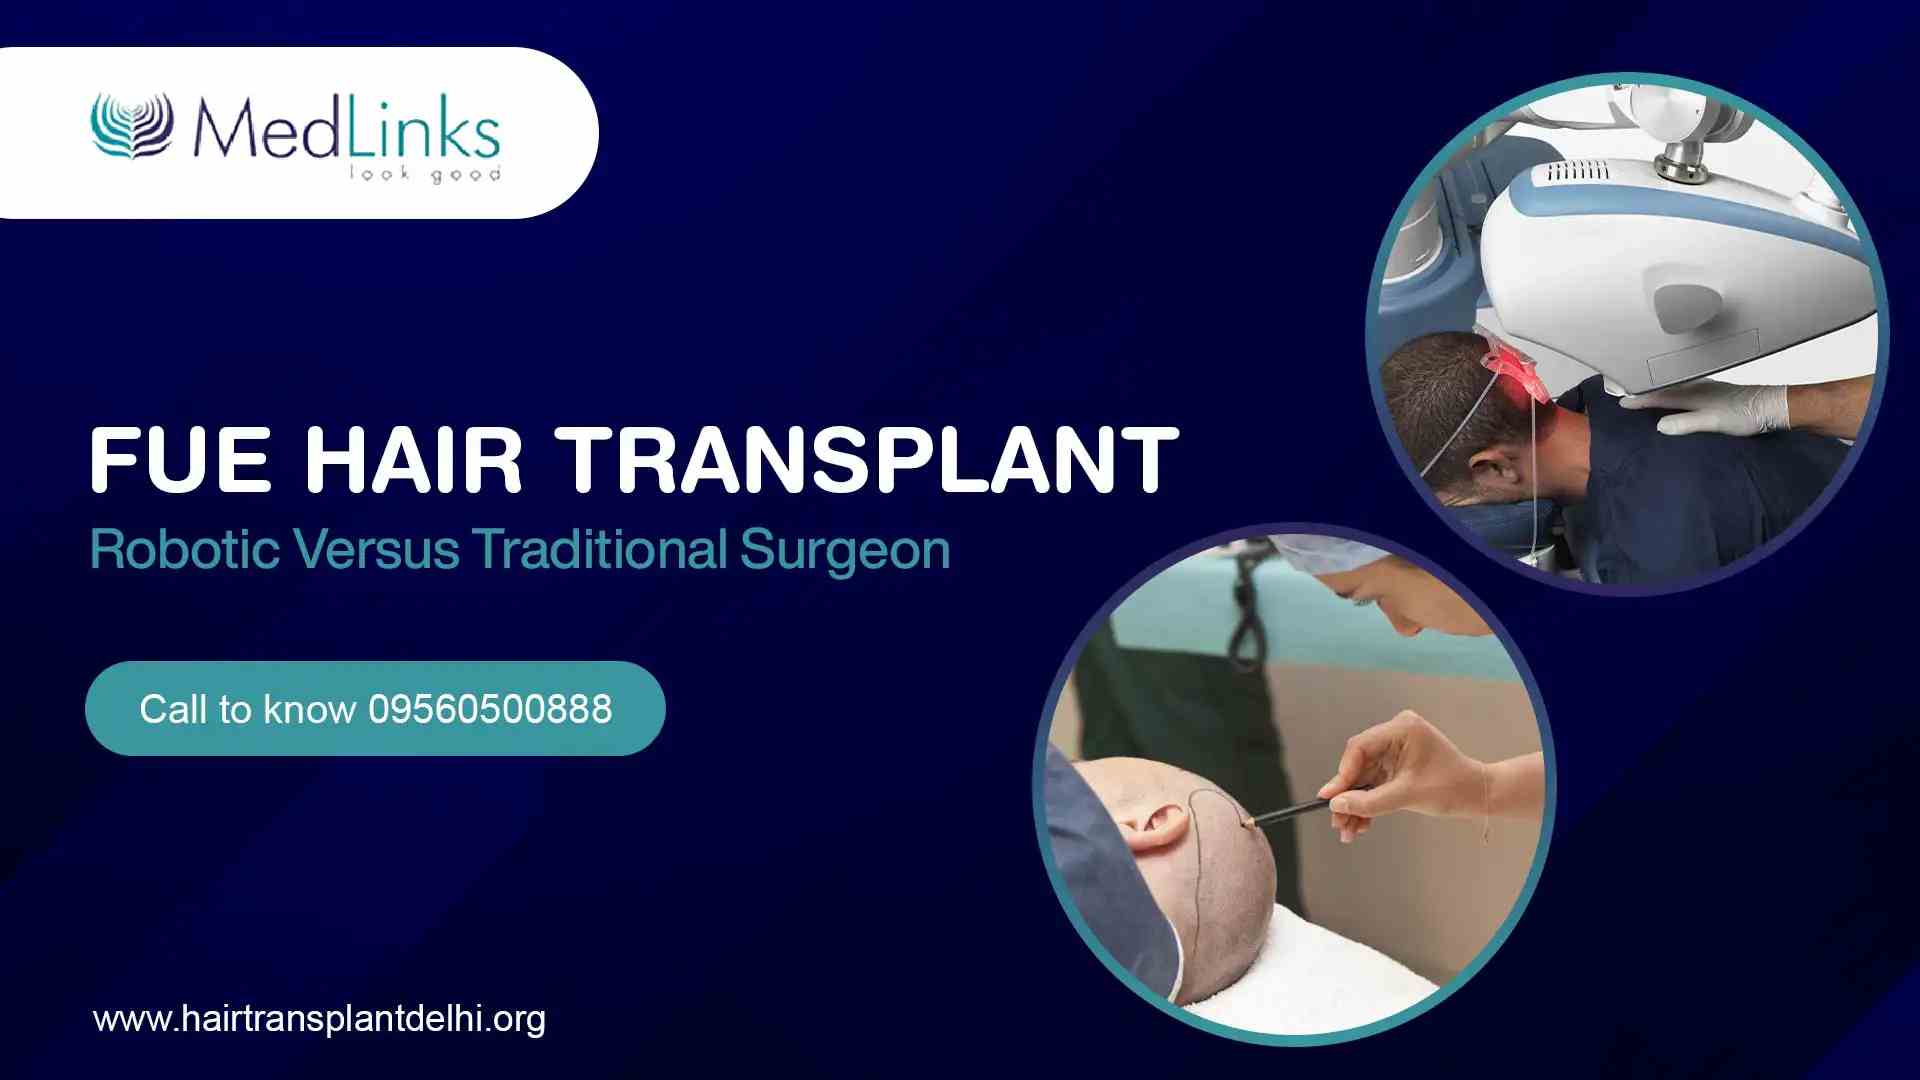 FUE Hair Transplant – Robotic vs. Traditional Surgery